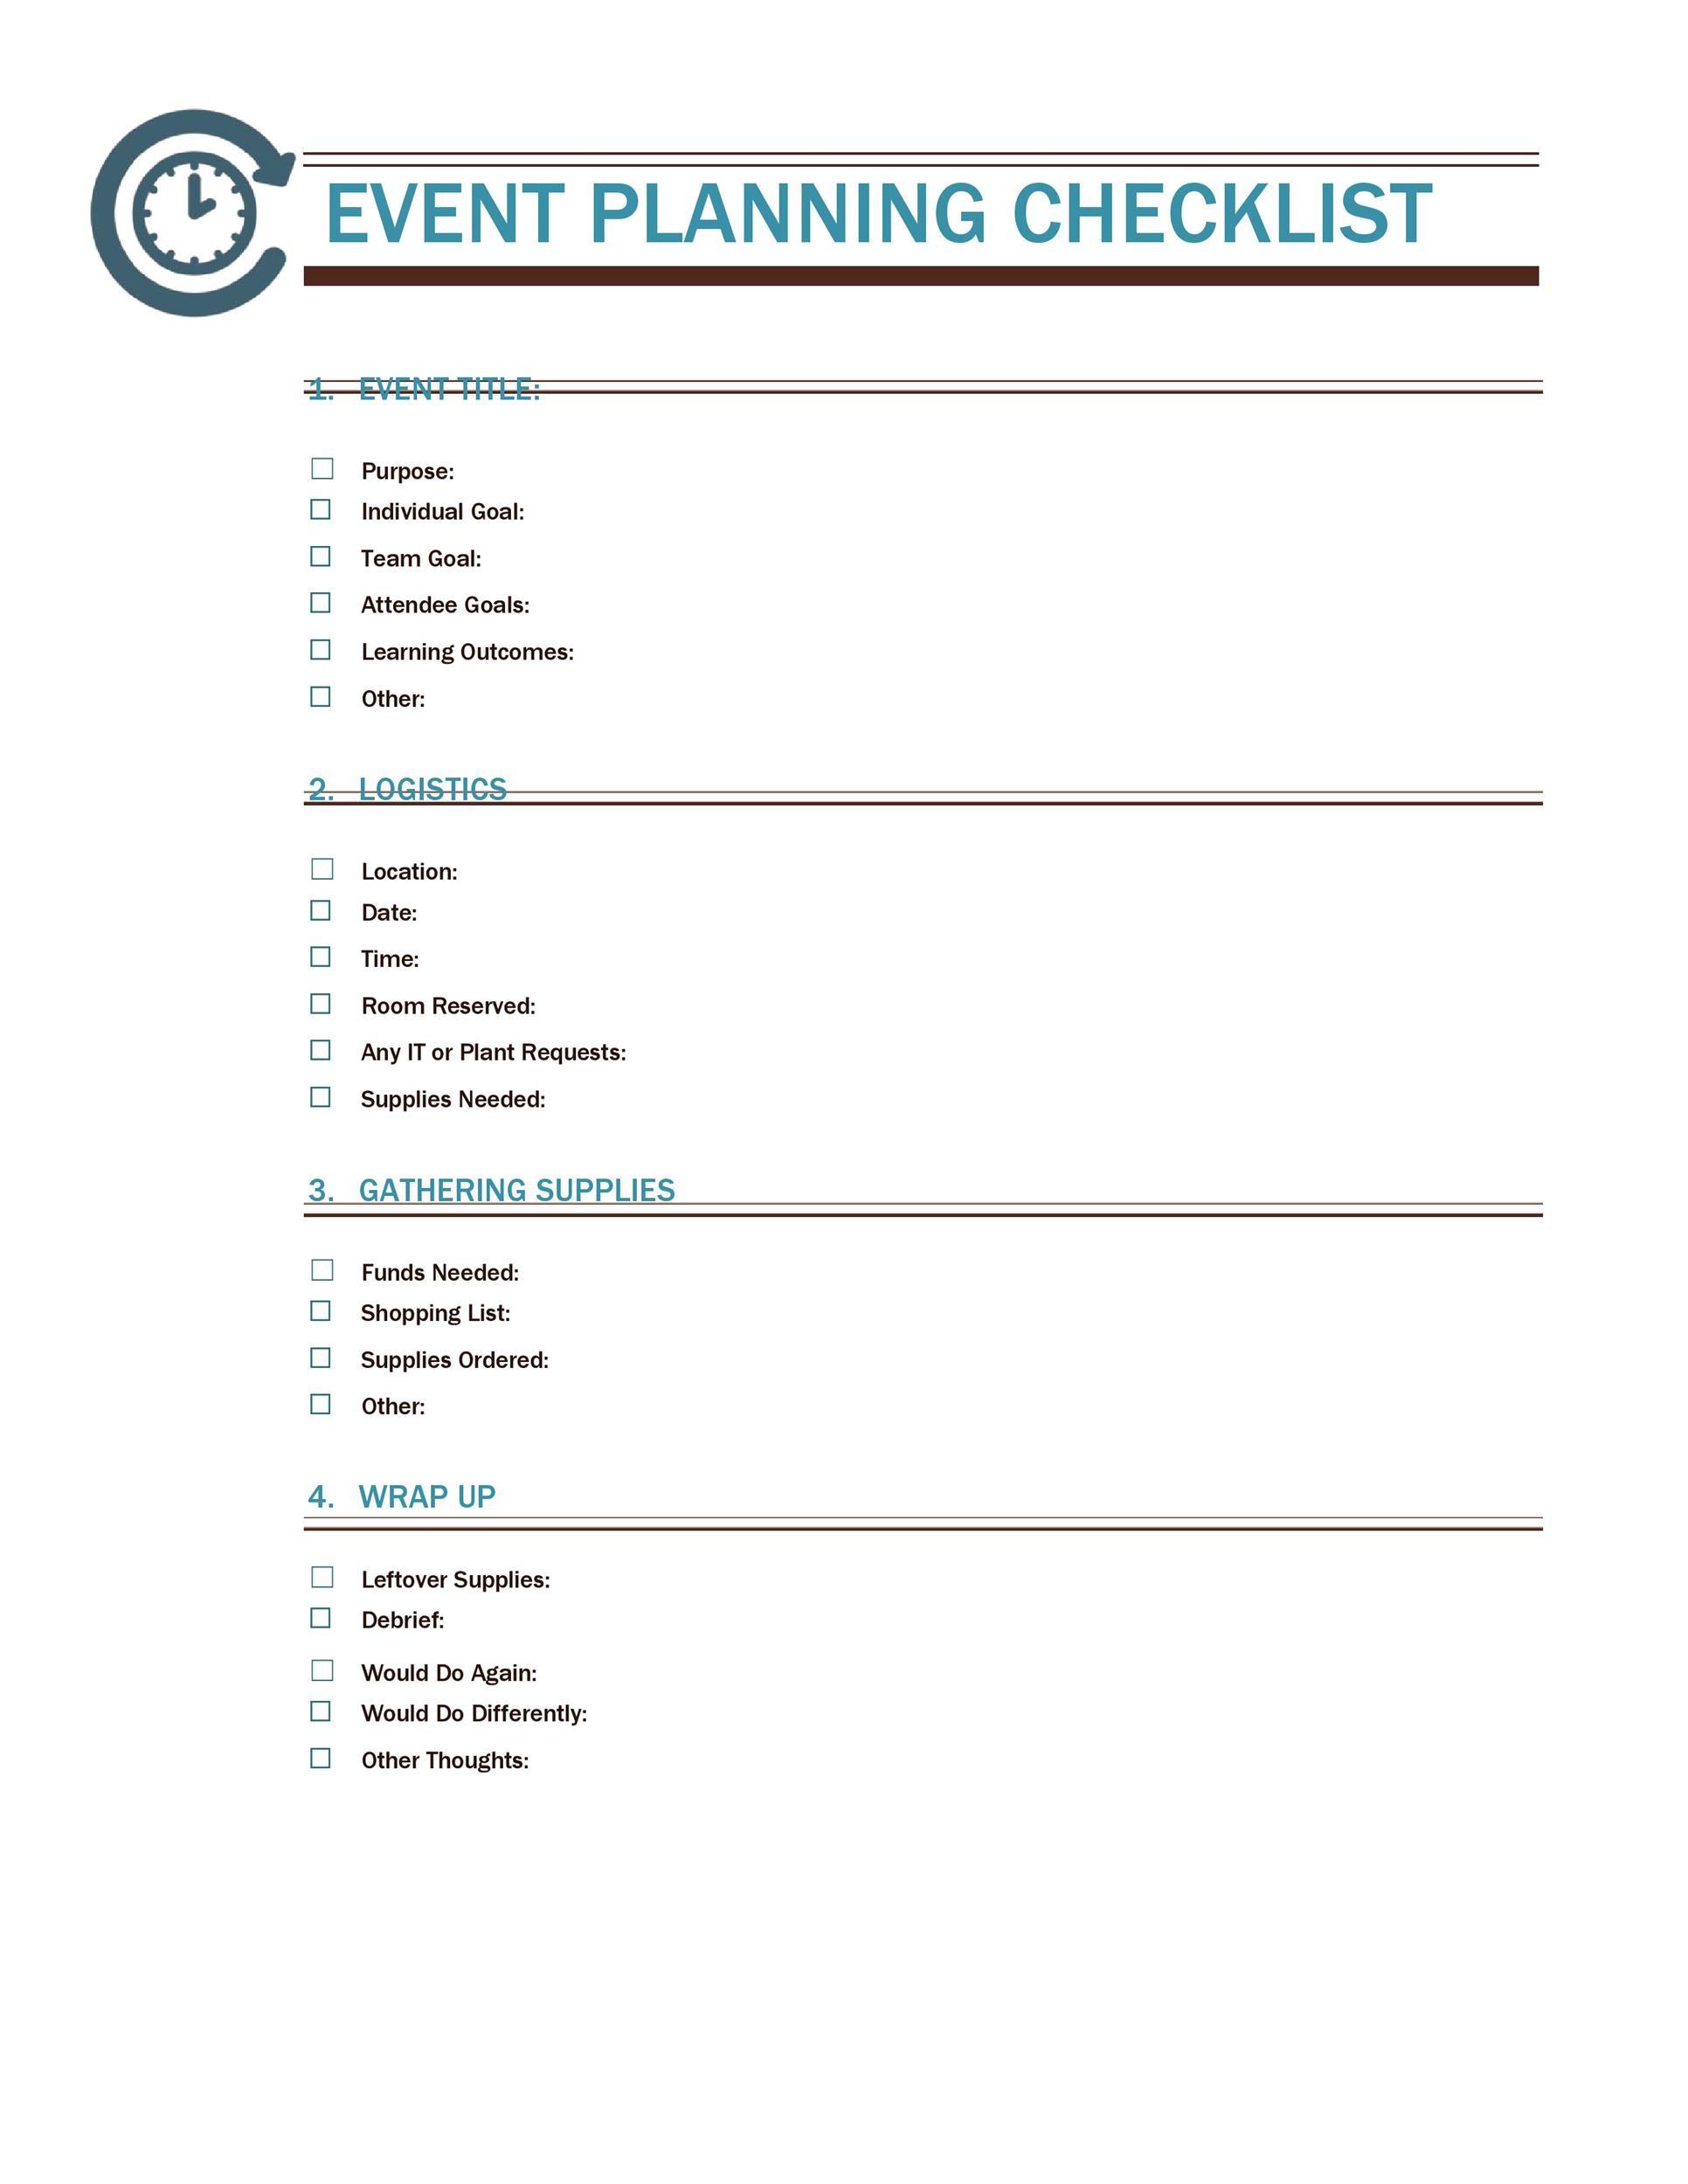 50-professional-event-planning-checklist-templates-templatelab